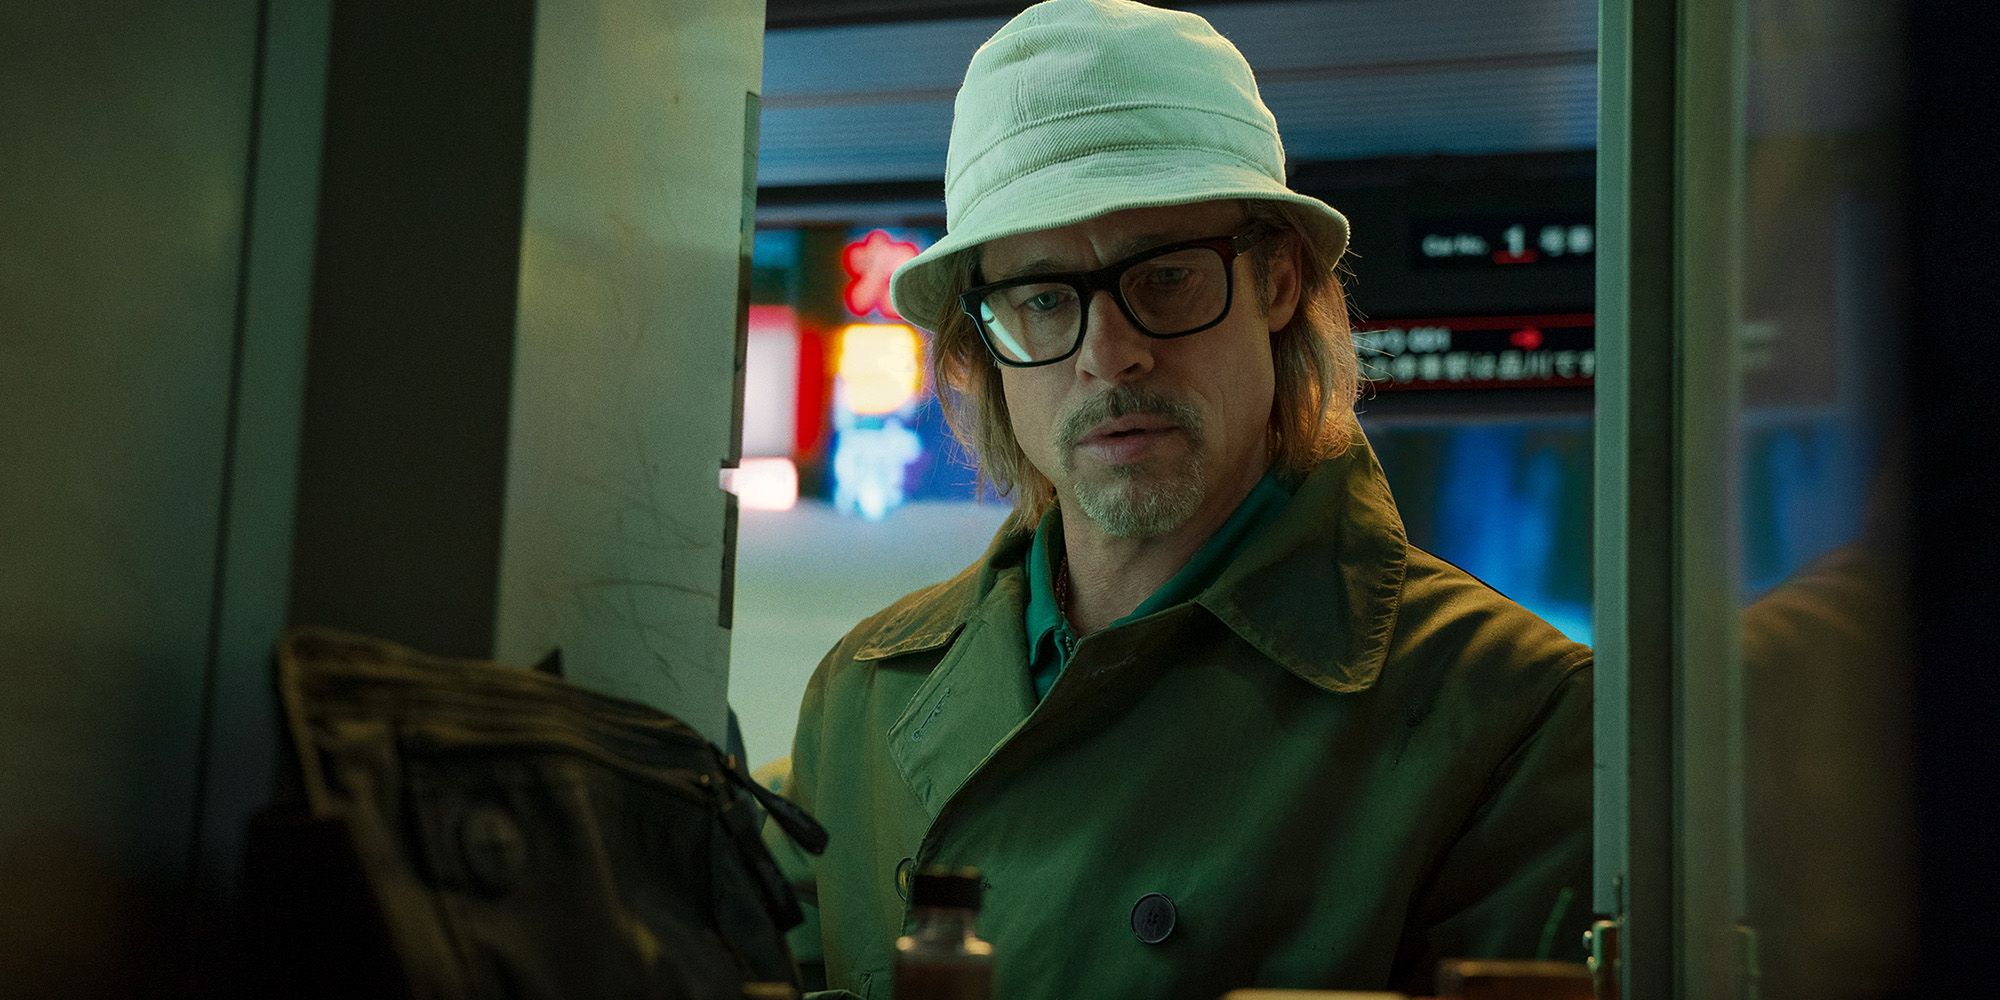 Bullet Train Movie Image Shows New Look At Brad Pitt's Action Hero